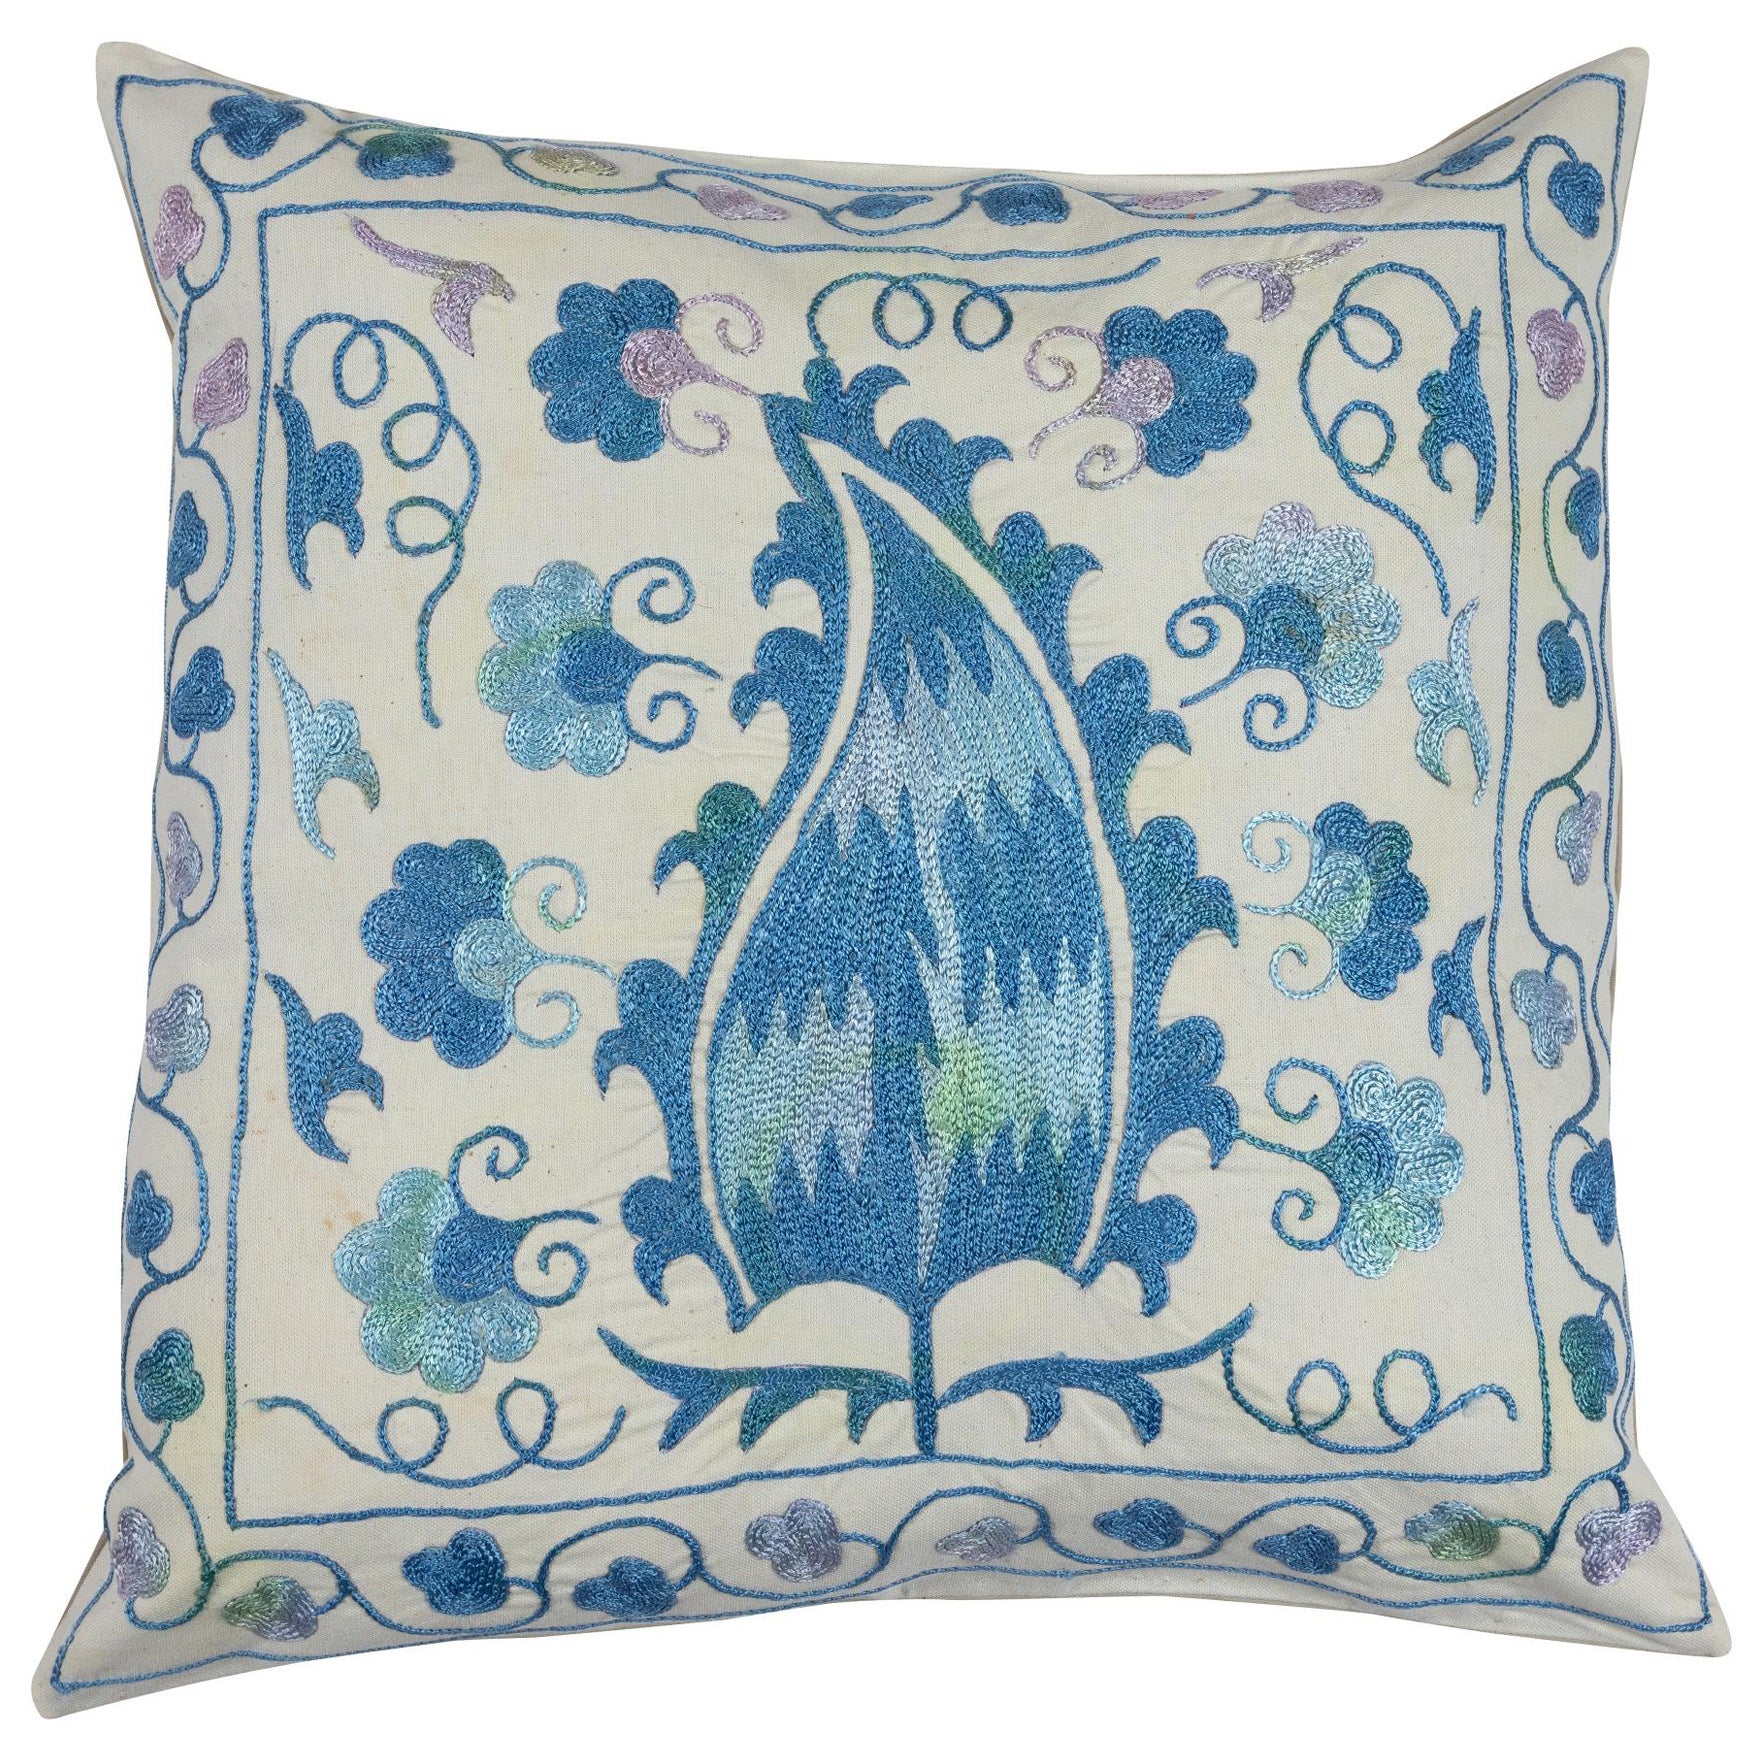 18"x18" Silk Embroidery Cushion Cover, Blue & Cream Lace Pillow, Uzbek Sham